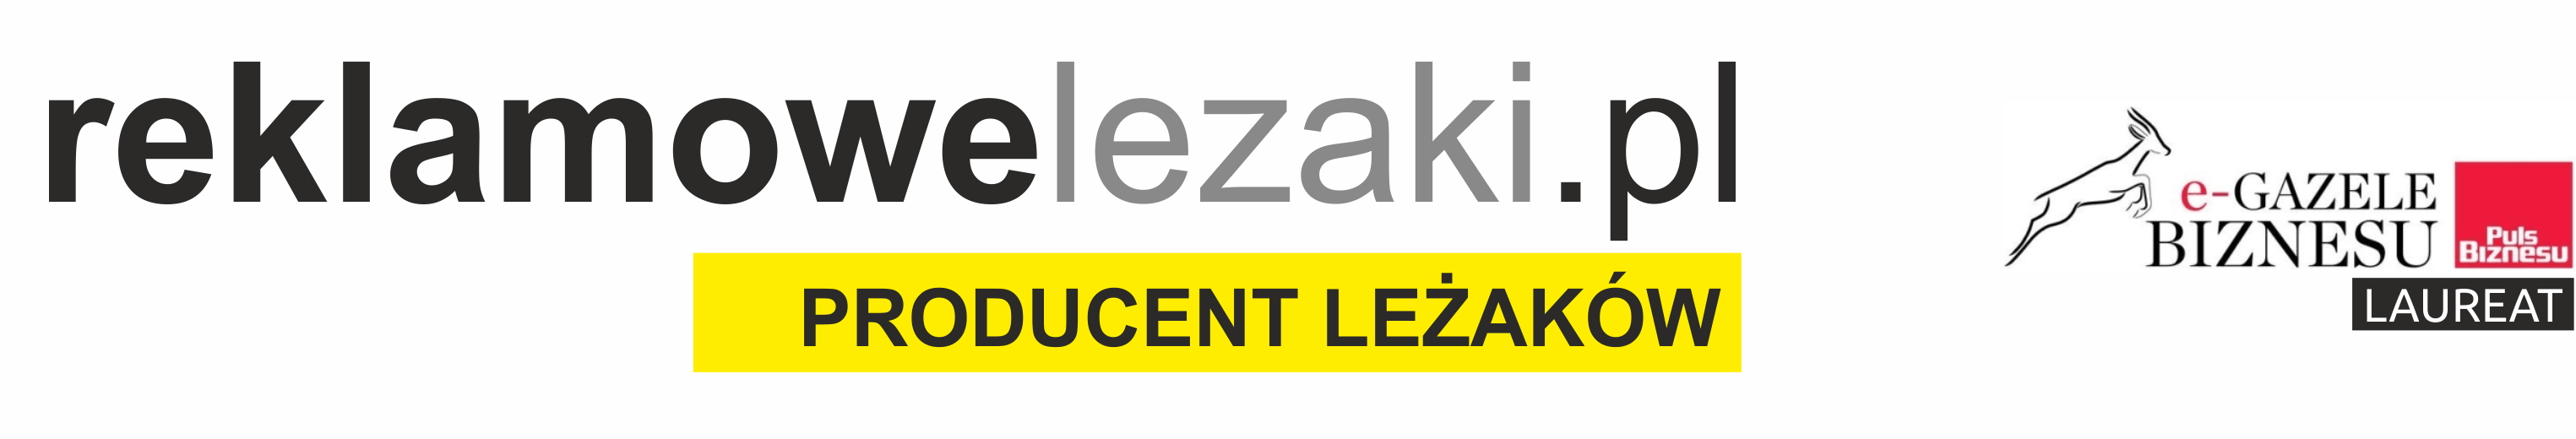 ReklamoweLezaki.pl